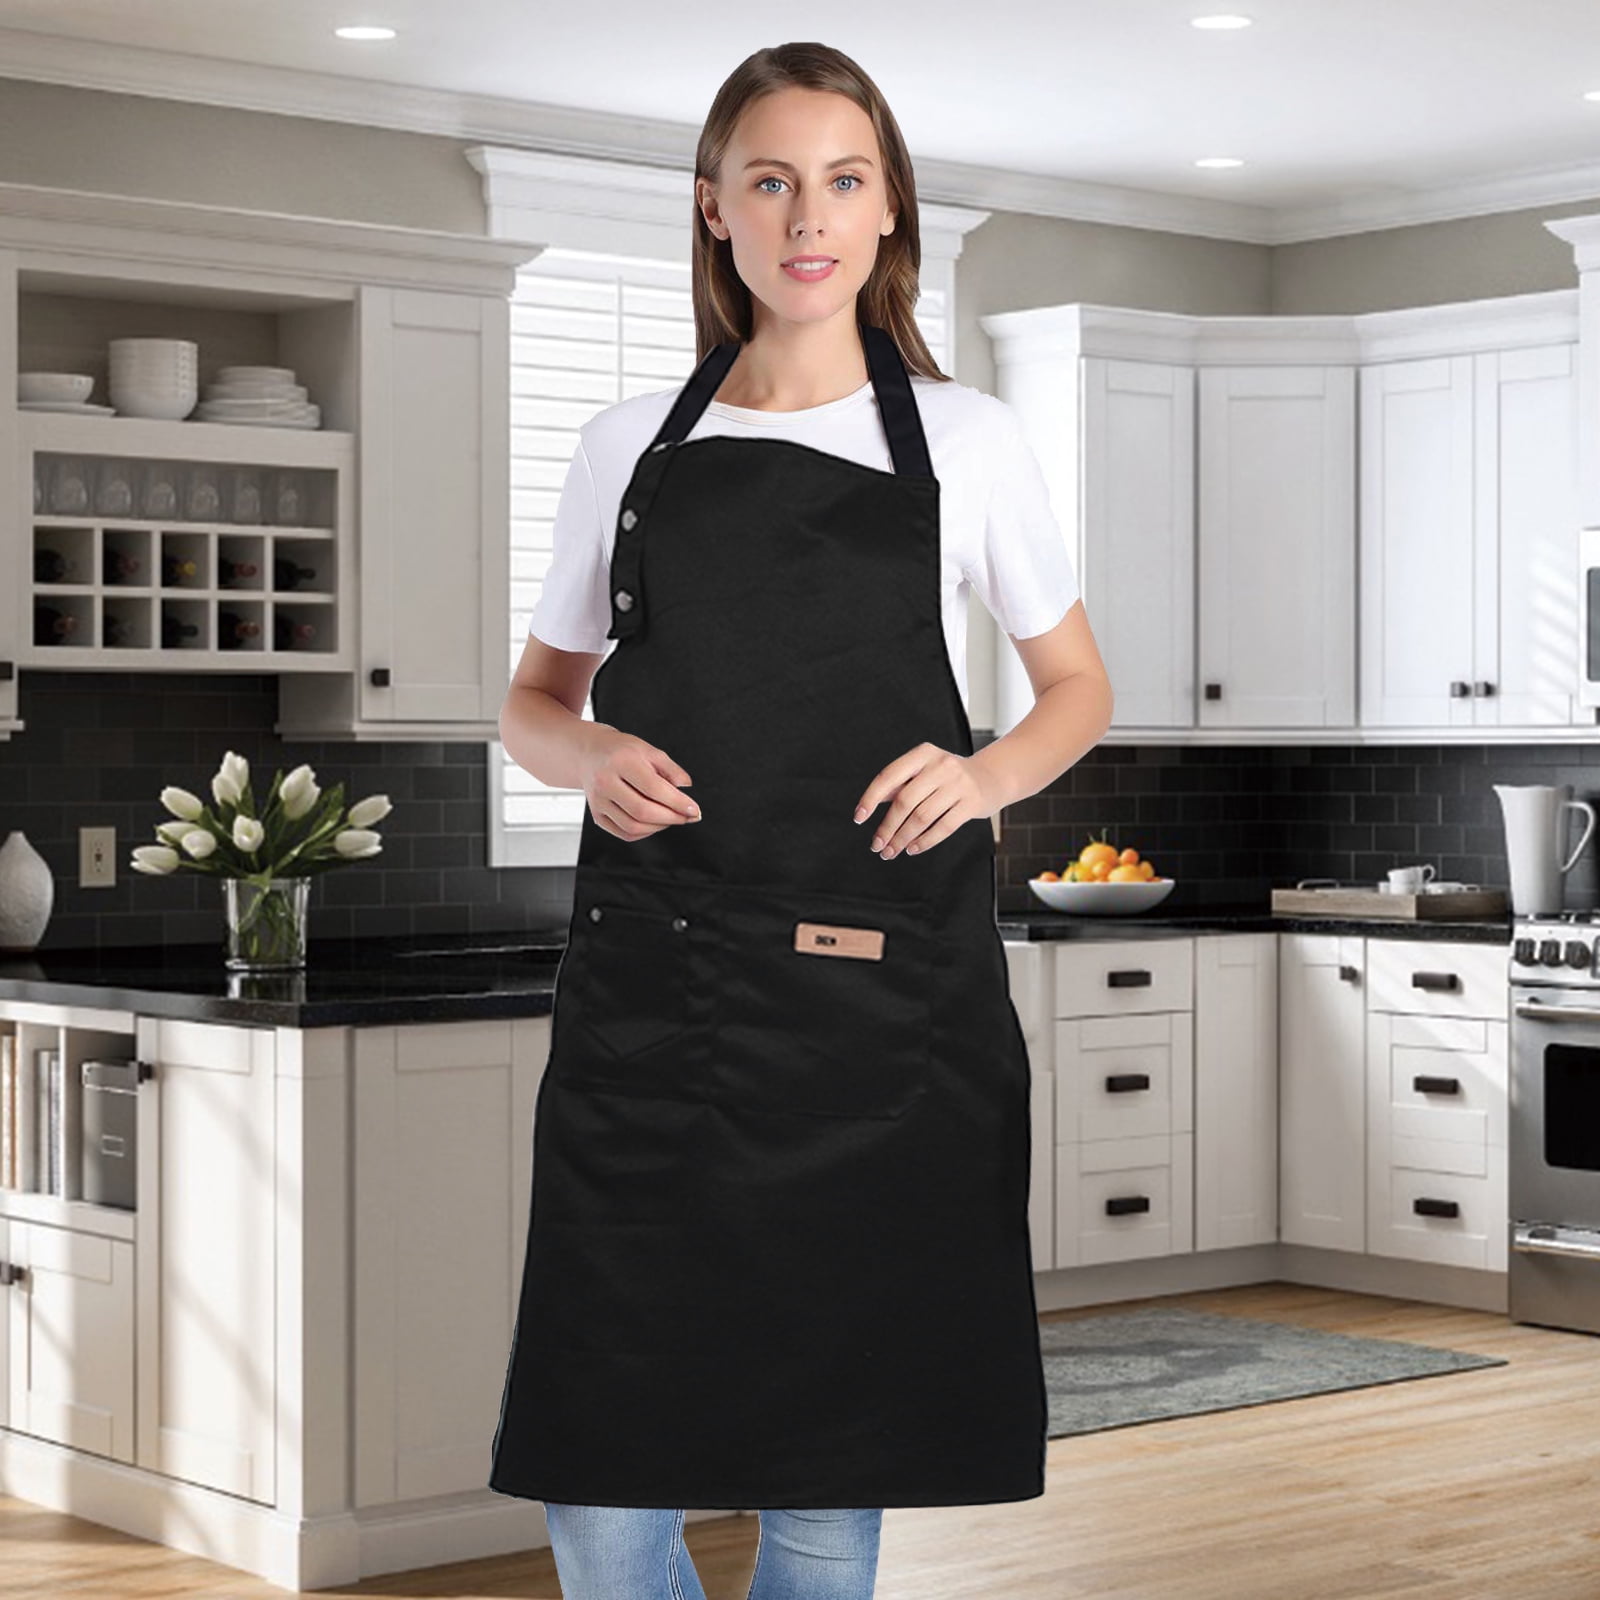 Adjustable Bib Apron - Unisex Durable Canvas Professional Kitchen Cooking  Apron with 2 Pockets, Quick Release Buckles - Walmart.com